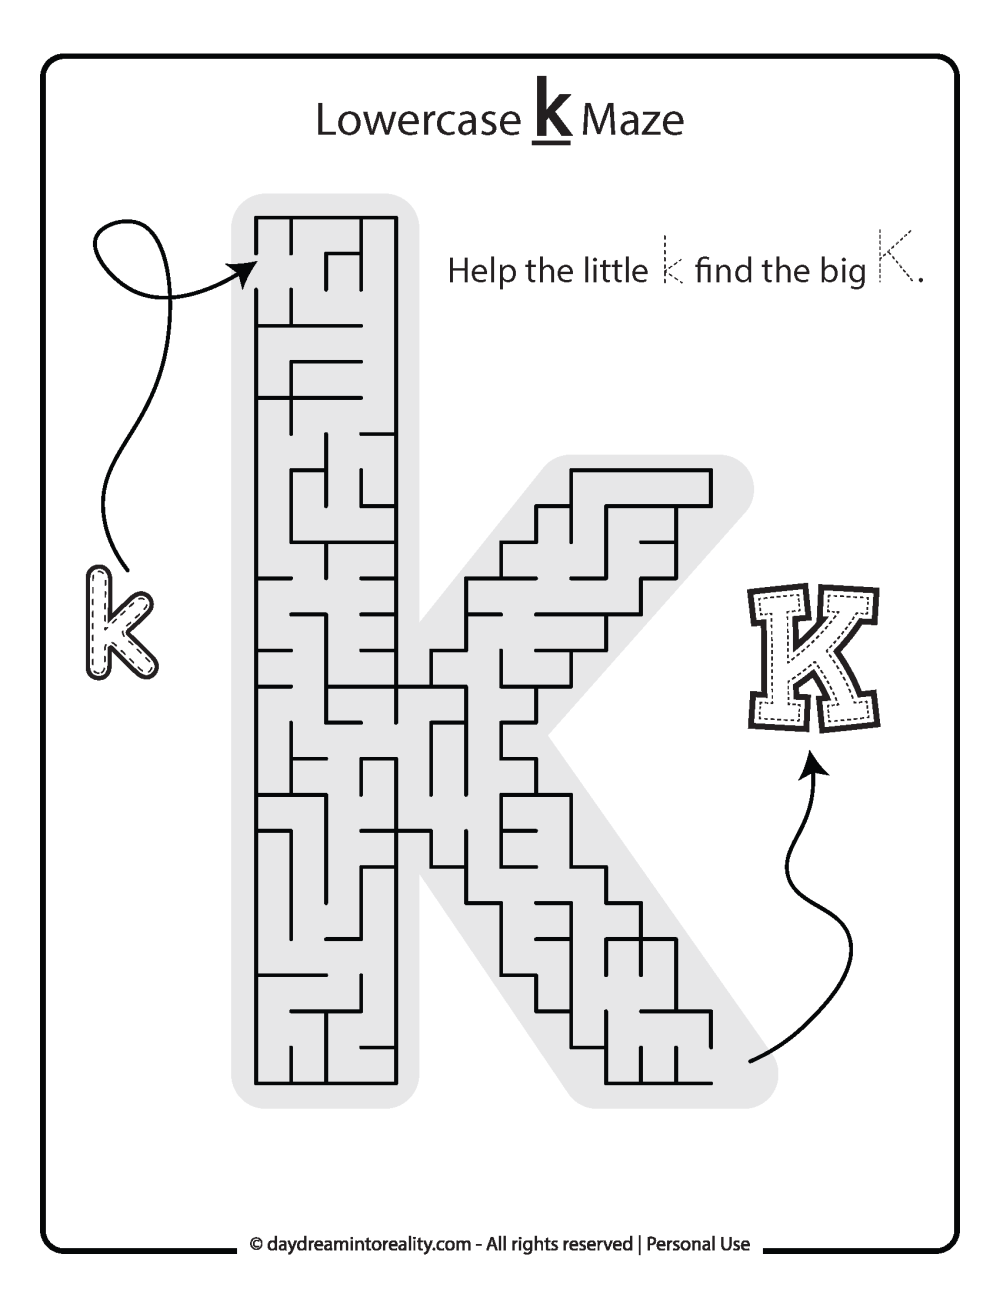 Lowercase "k" Maze Free Printable